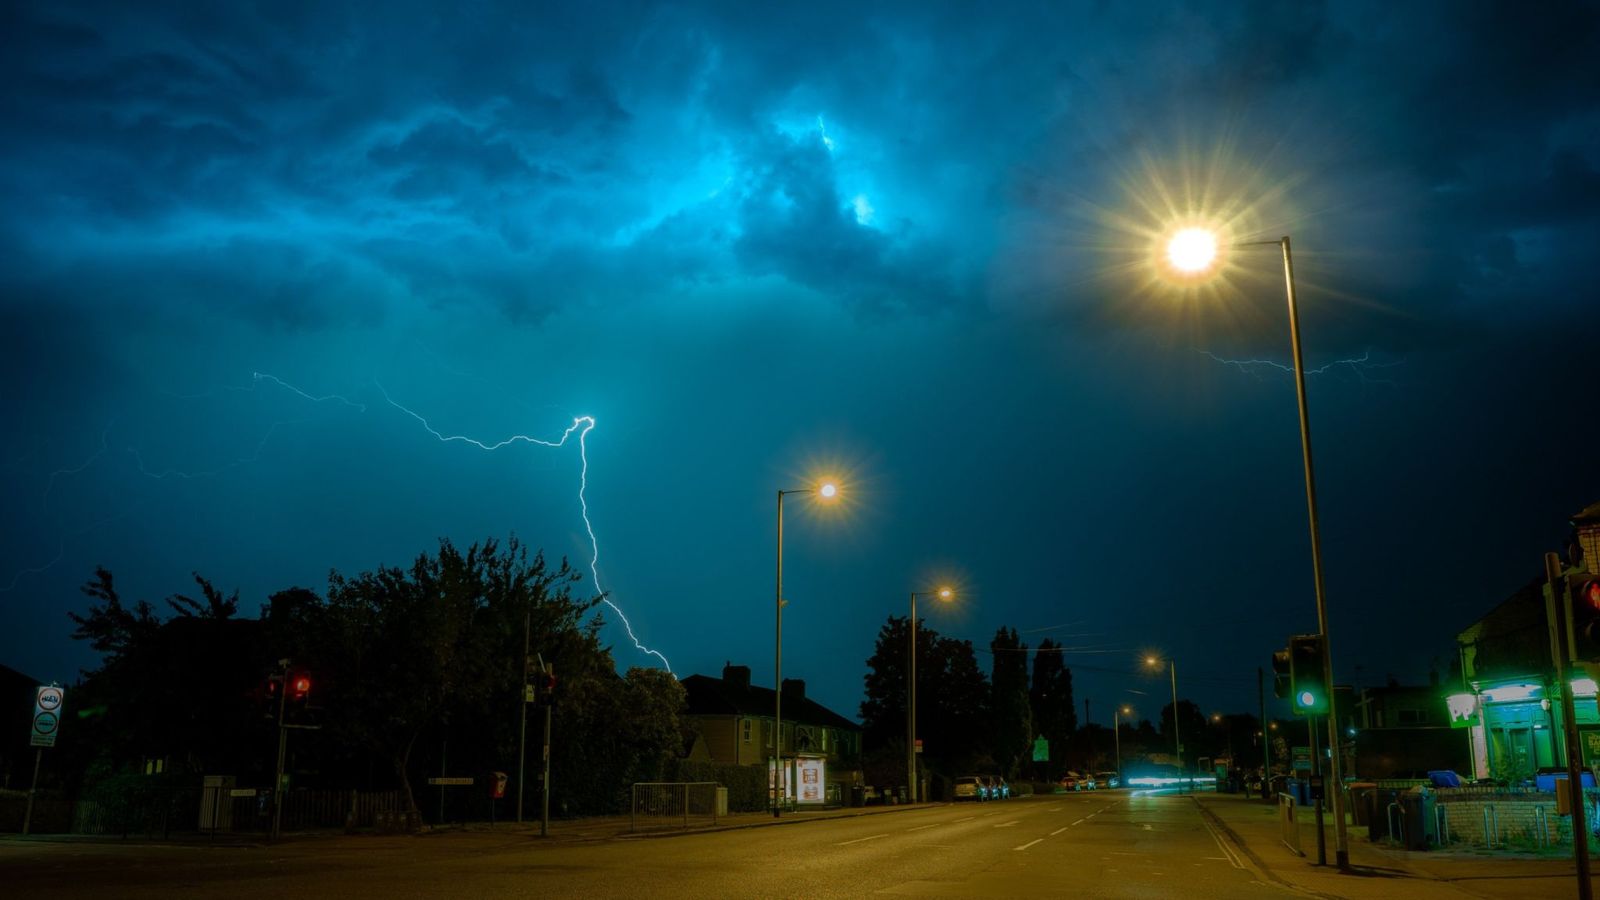 Thunderstorms strike Britain ahead of record-breaking heat